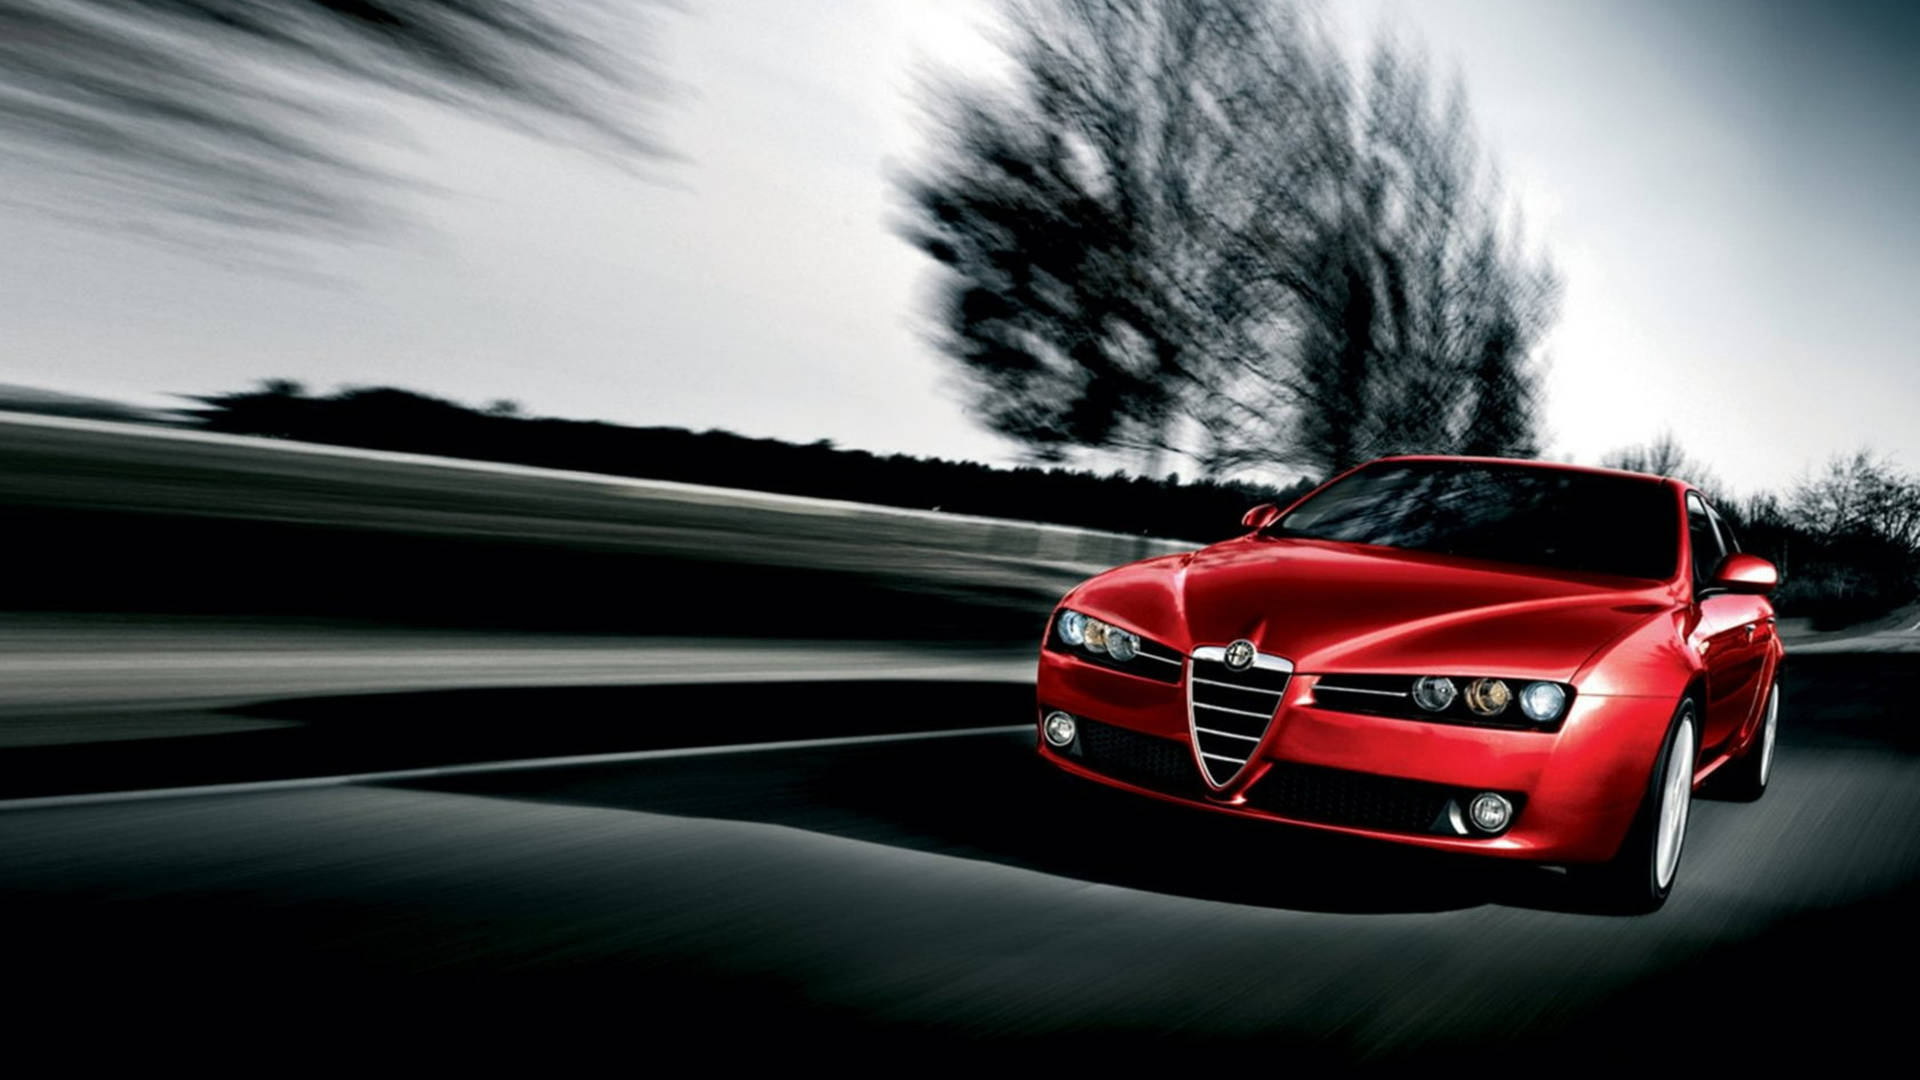 Speeding red Alfa Romeo 159 compact executive car wallpaper.